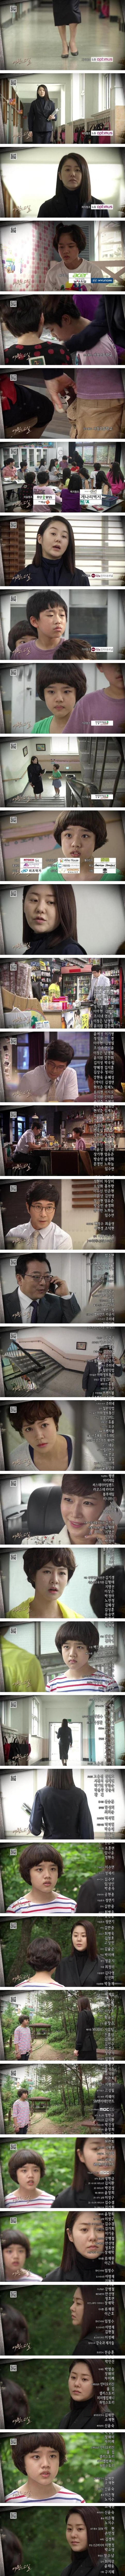 episode 14 captures for the Korean drama 'The Queen's Classroom'